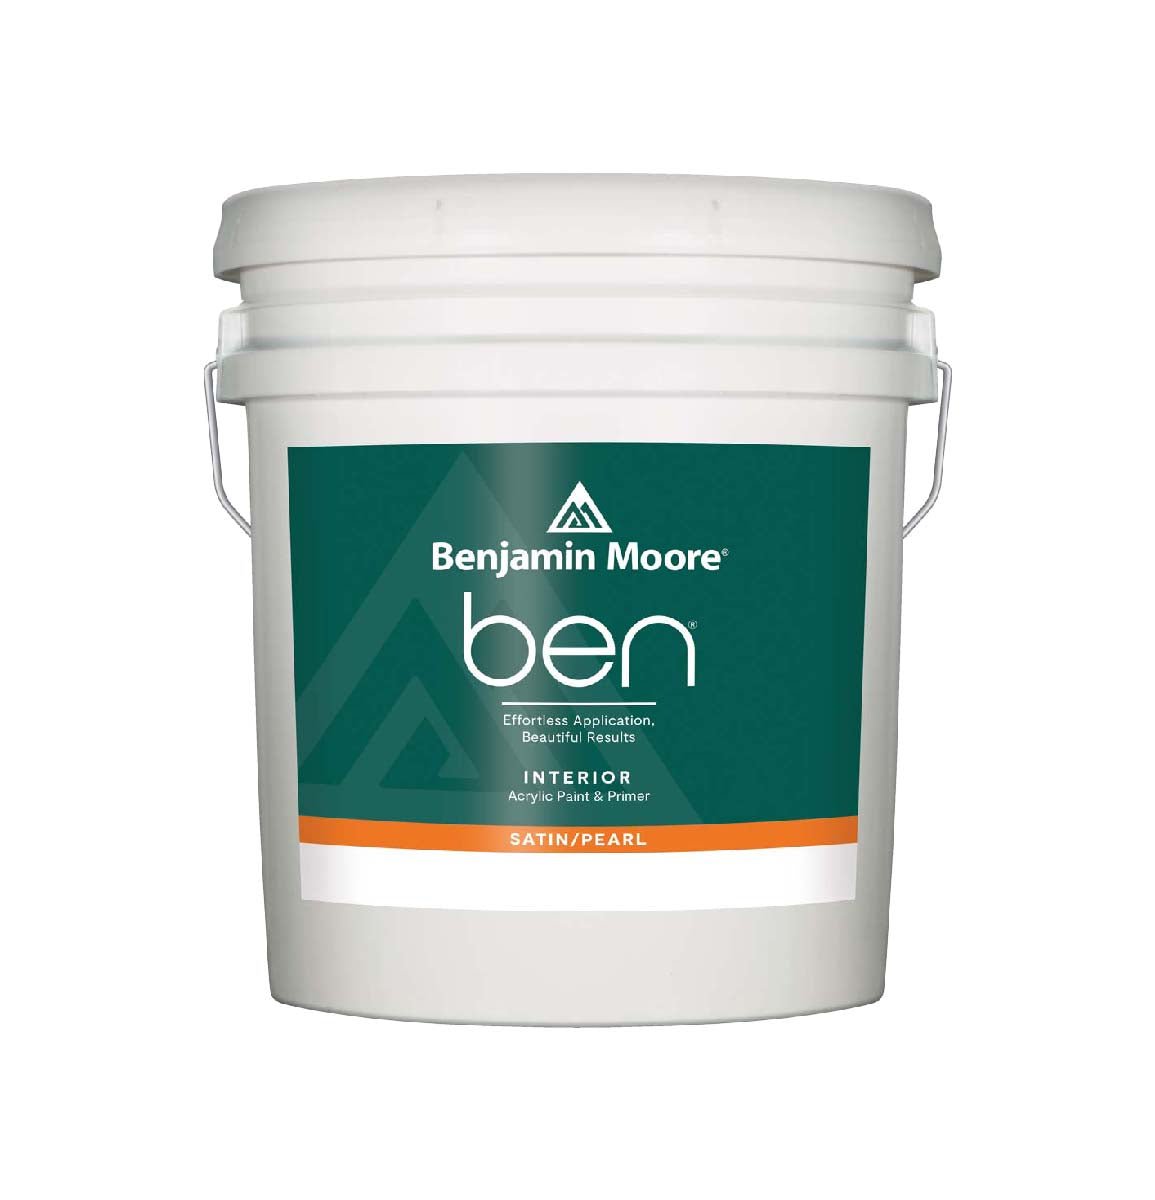 Benjamin Moore ben - Rossi Paint Stores - Satin/Pearl - 5 Gallon